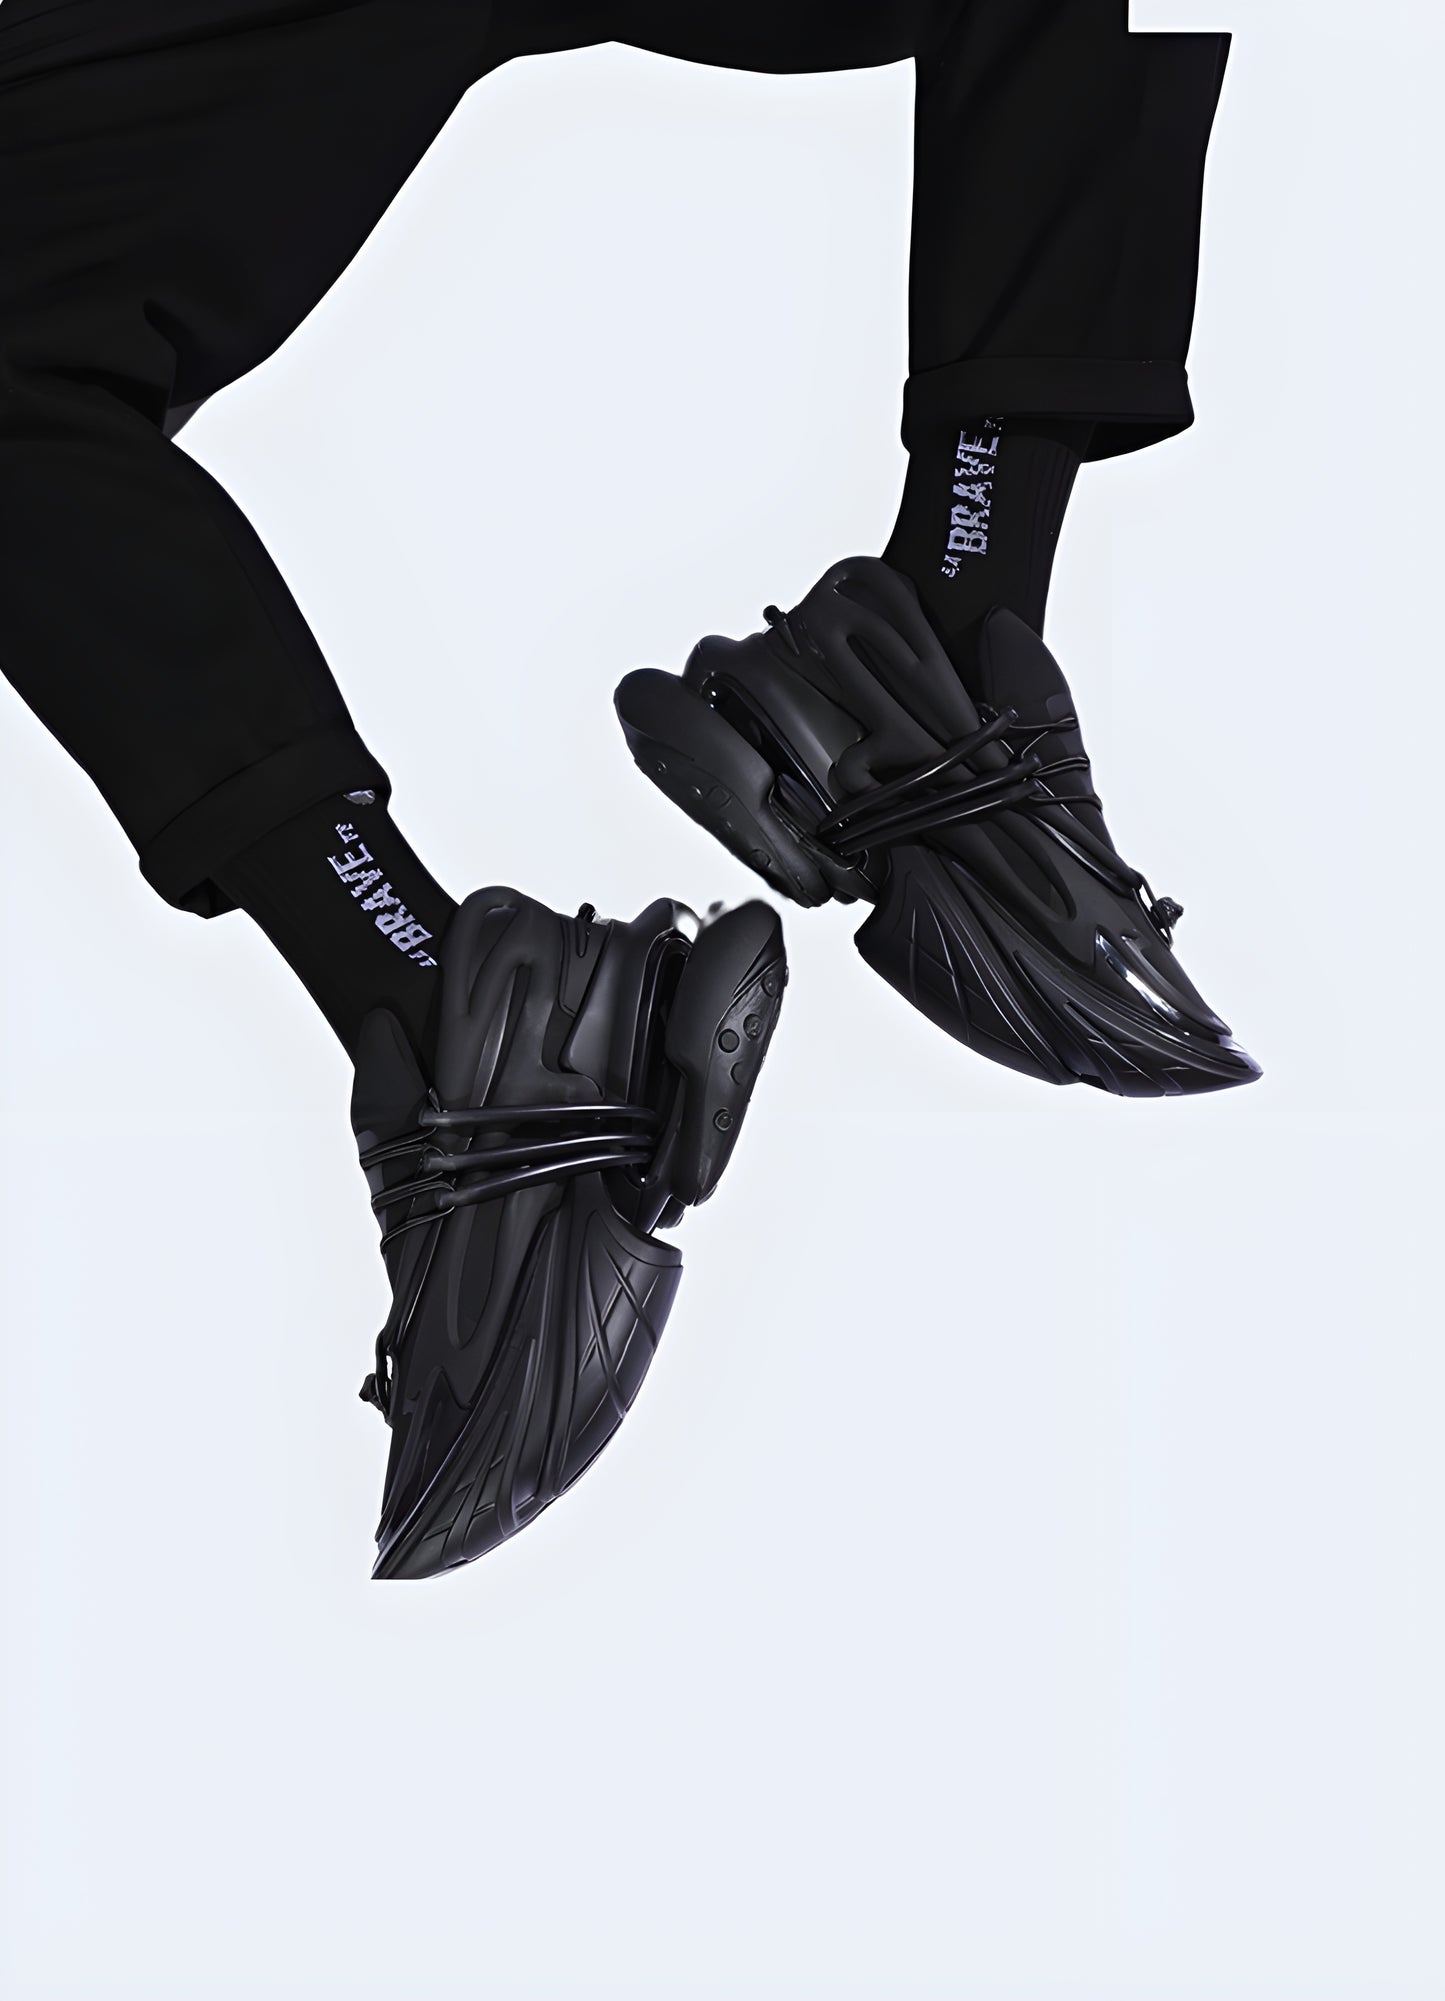 These shoes feature a sleek, minimalist design with a black color scheme.